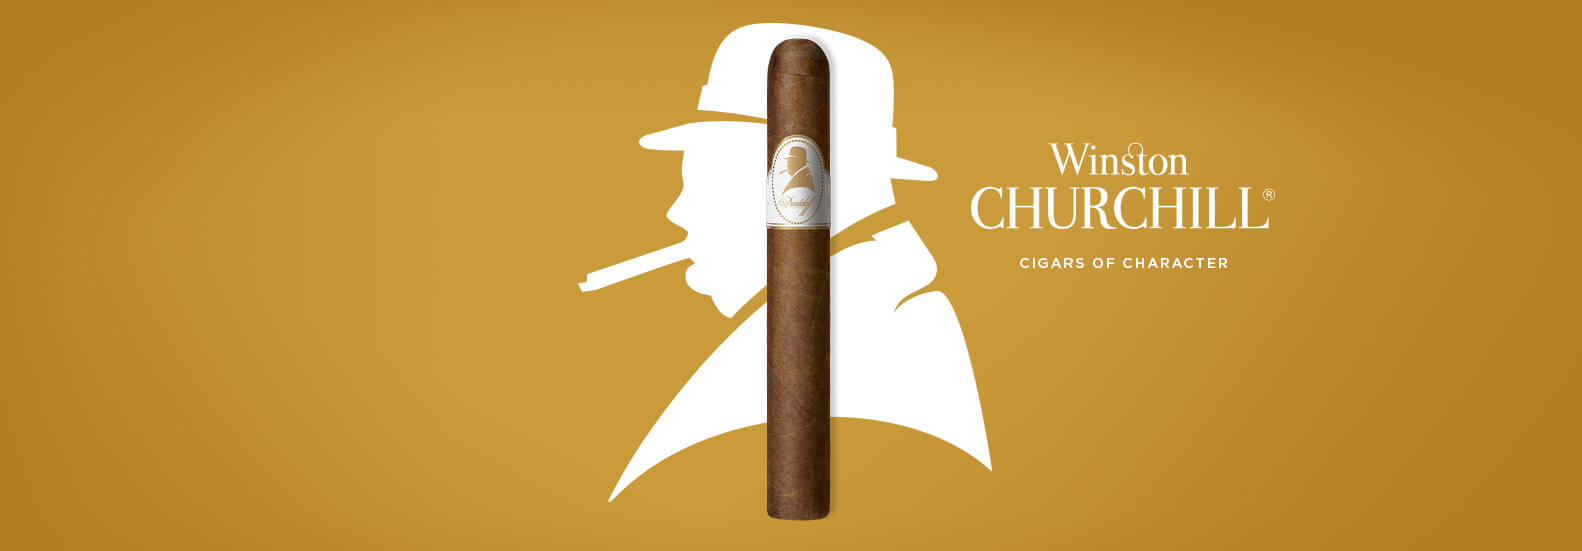 Winston Churchill Original Collection Petit Panetela Cigar with Winston Churchill Logo in the Back